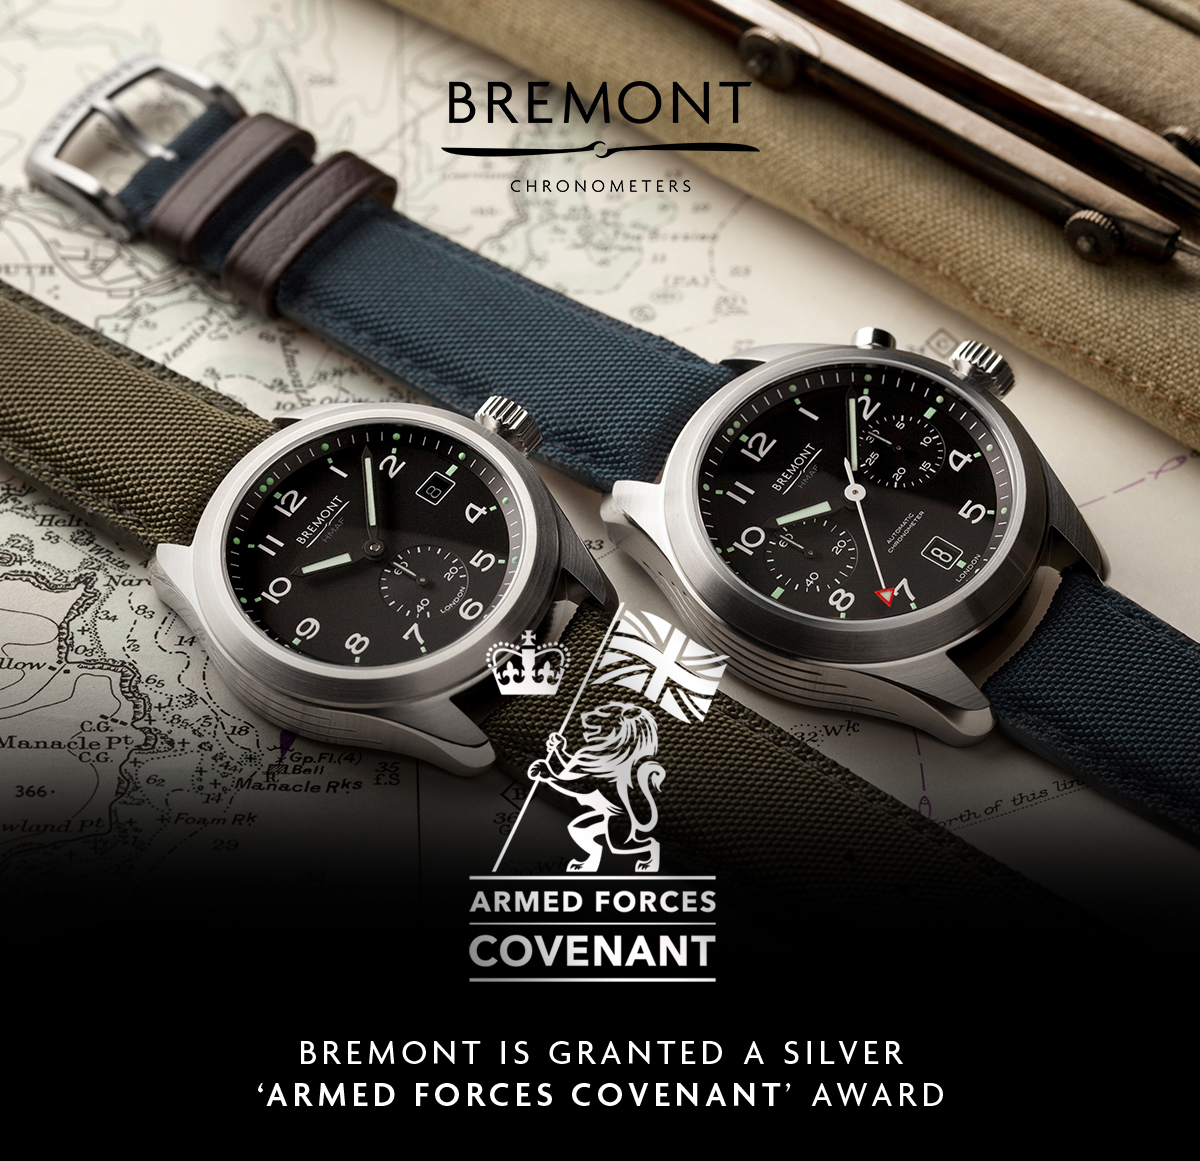 Bremont Armed Forces Covenant